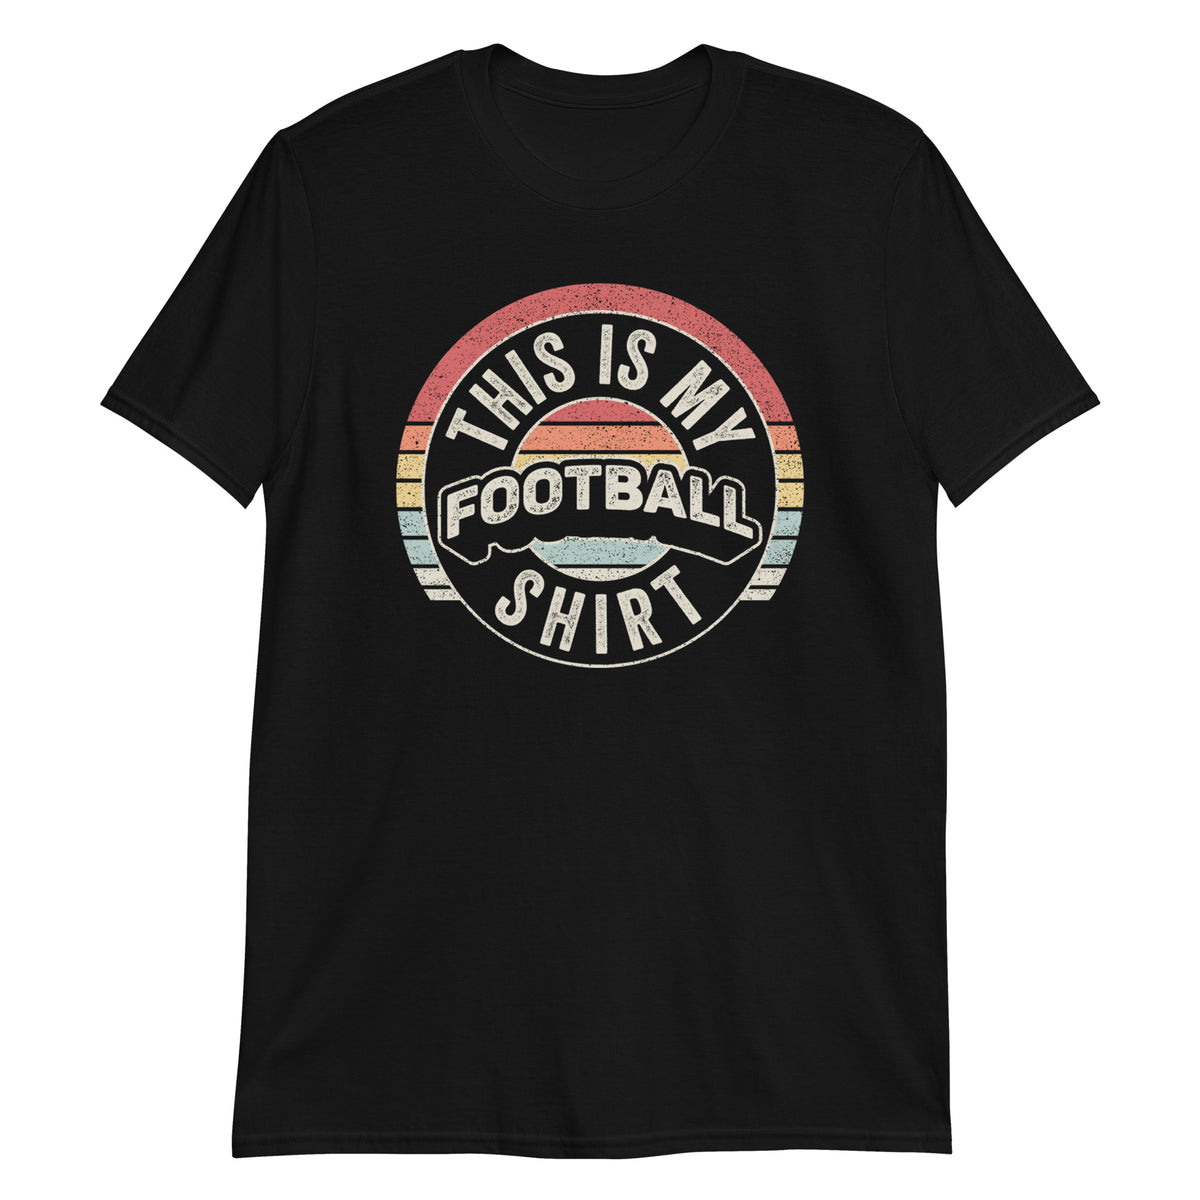 This is My Football Shirt T-Shirt